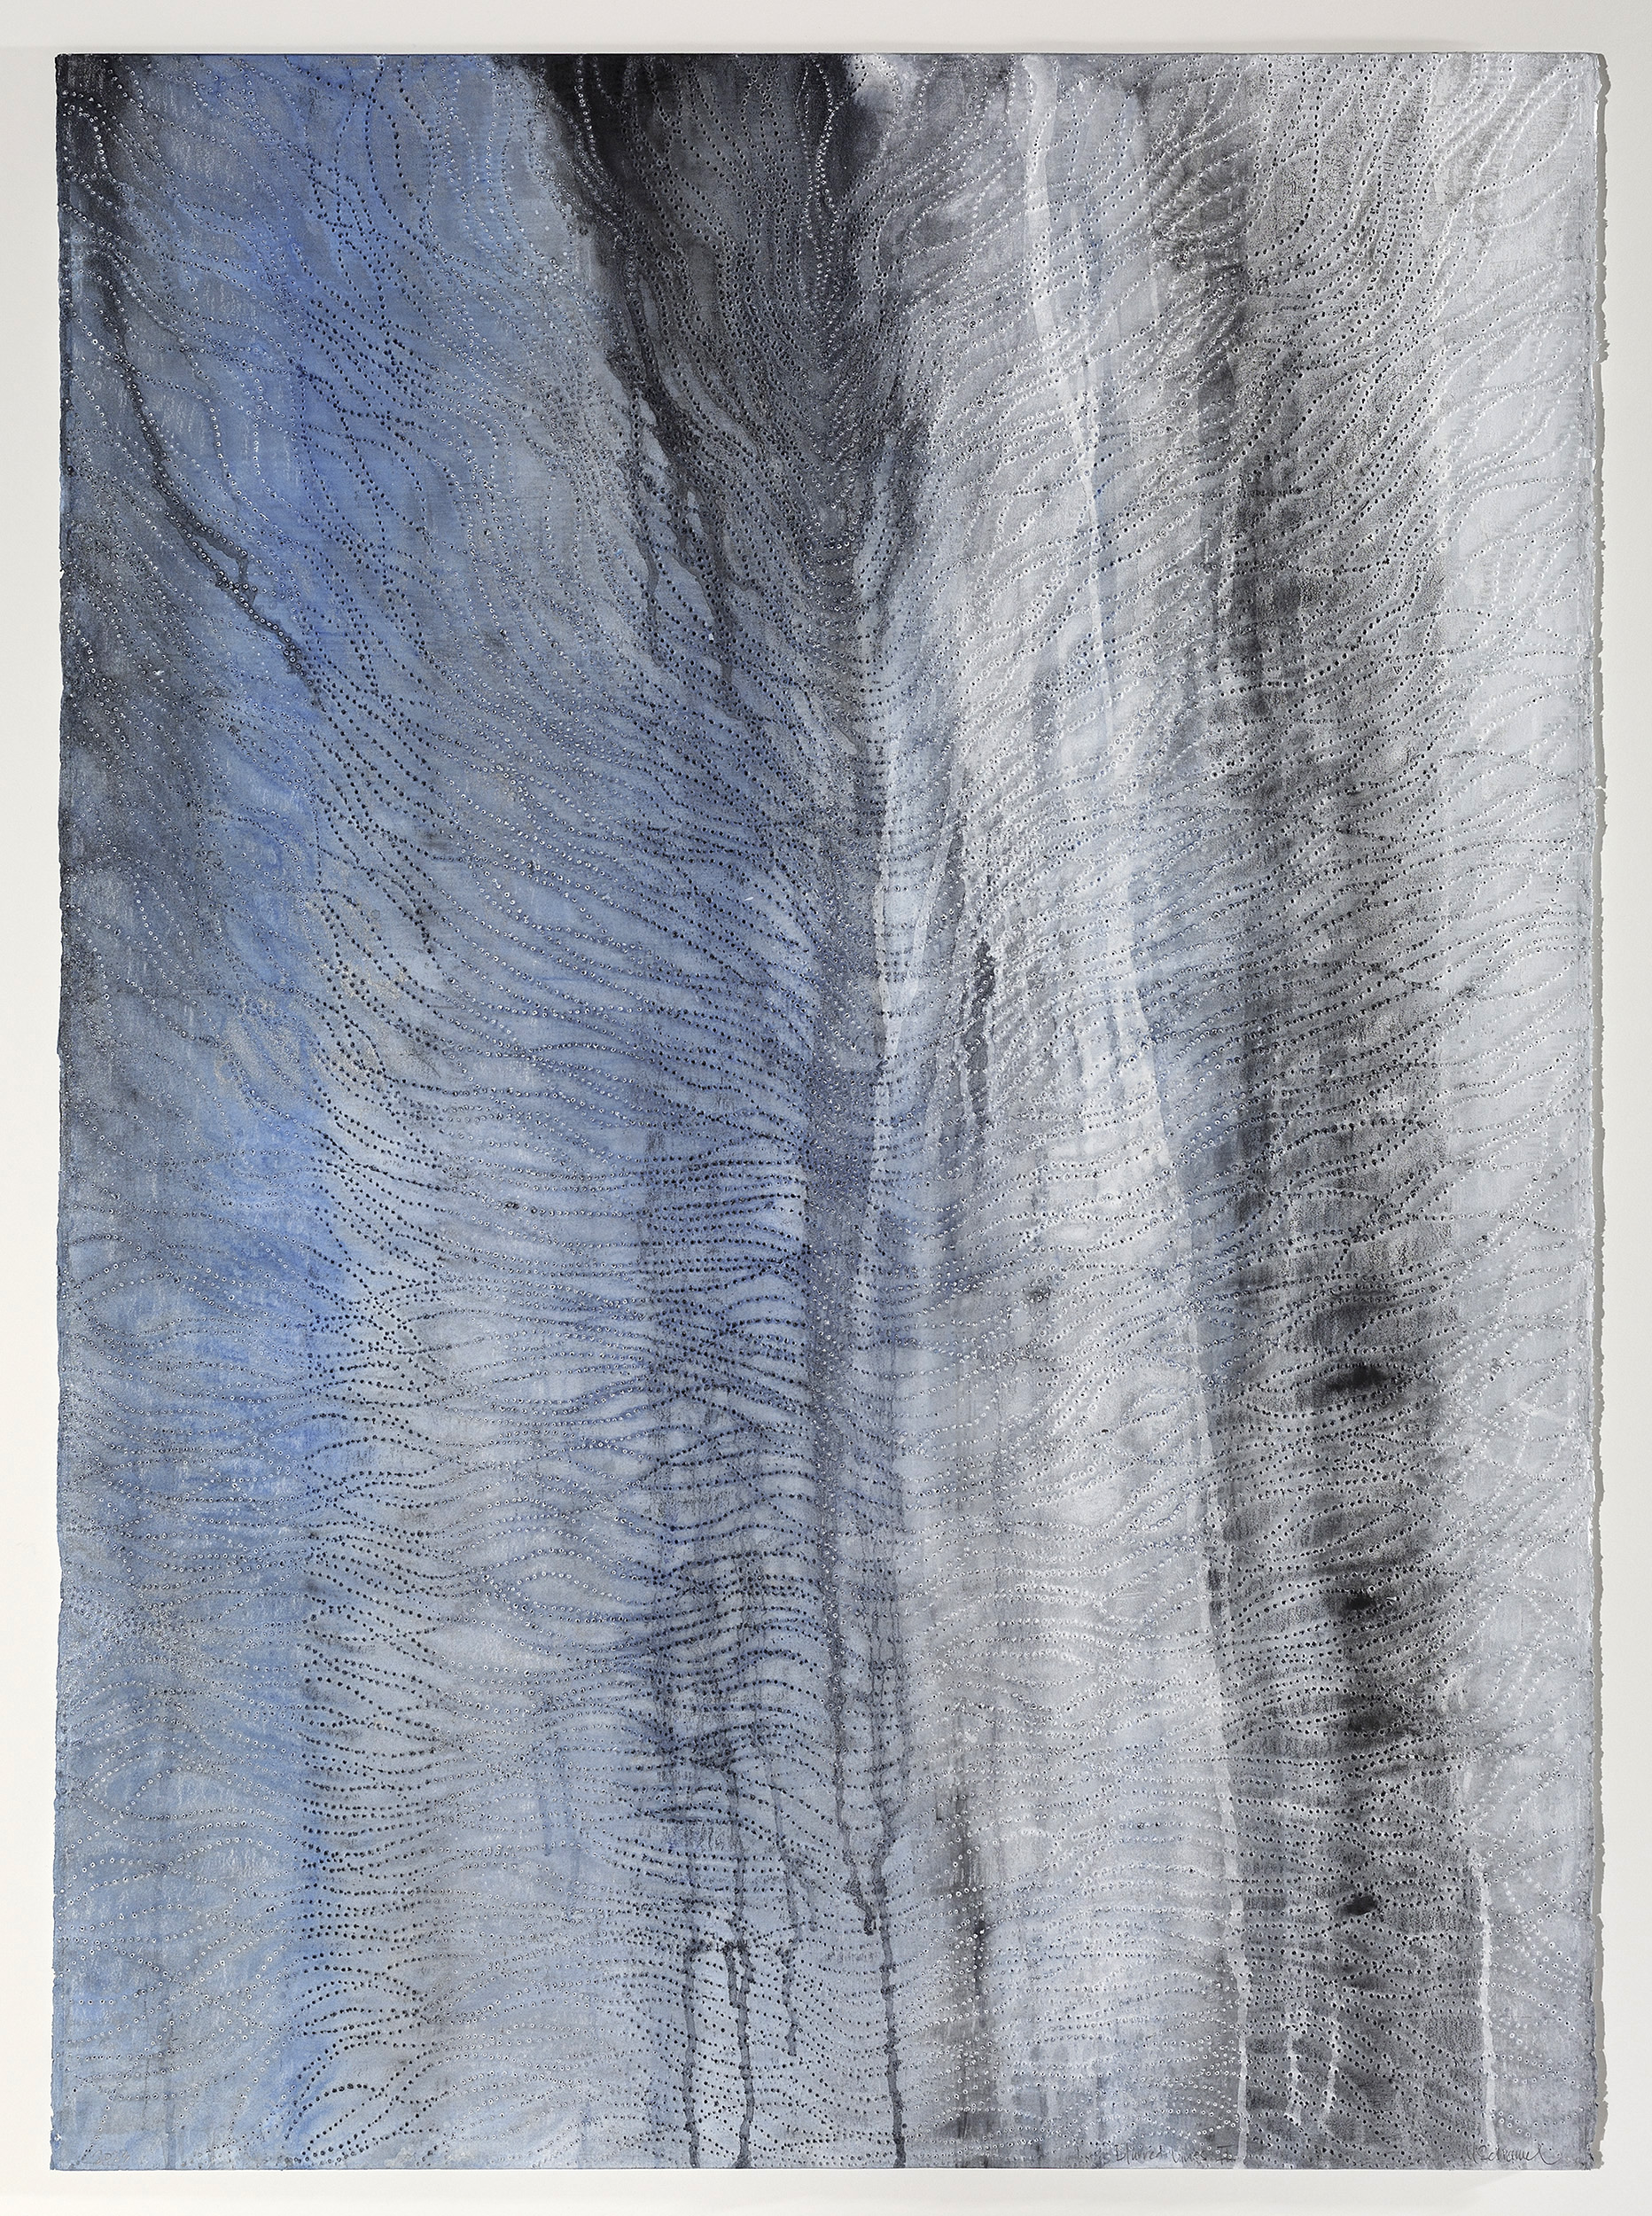 Melinda Schawel 'Blurred Lines II' ink, graphite on perforated paper 105 x 75cm $6,600